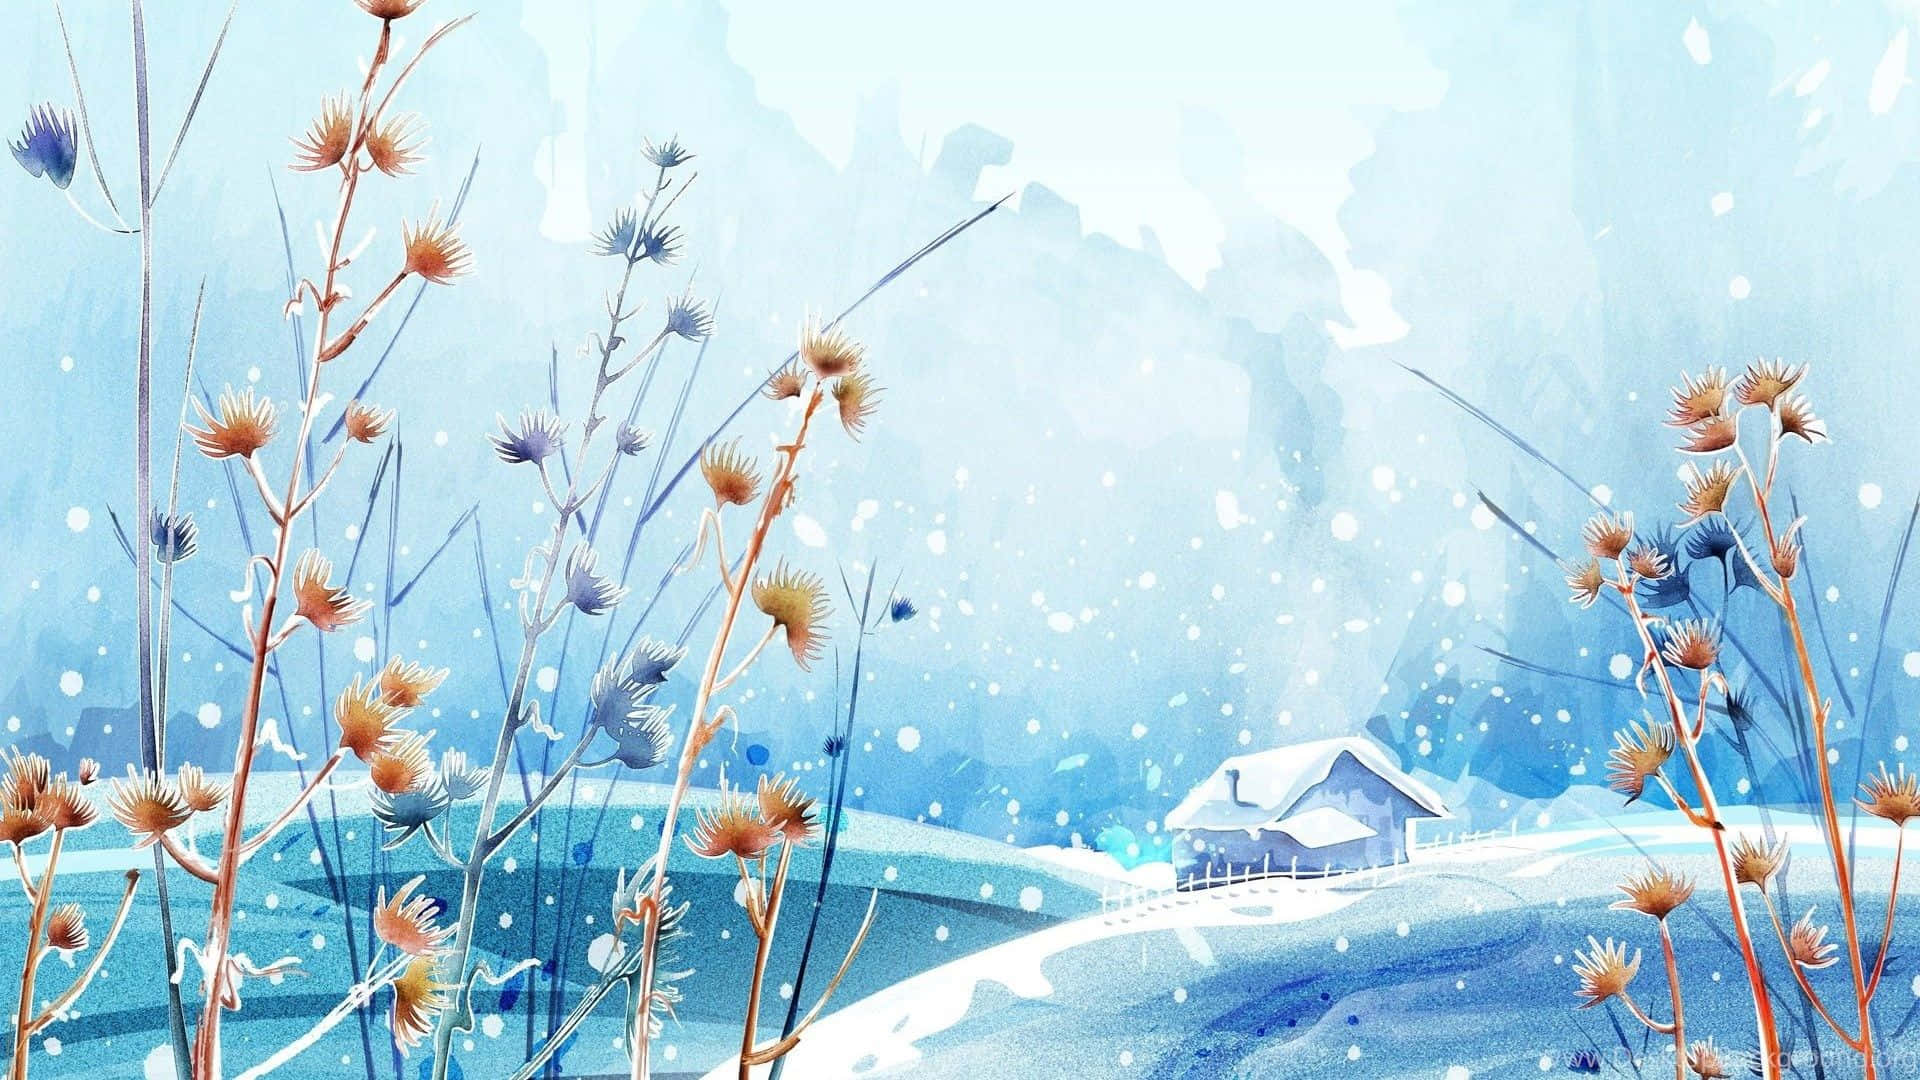 "Winter Wonderland Painting" Wallpaper